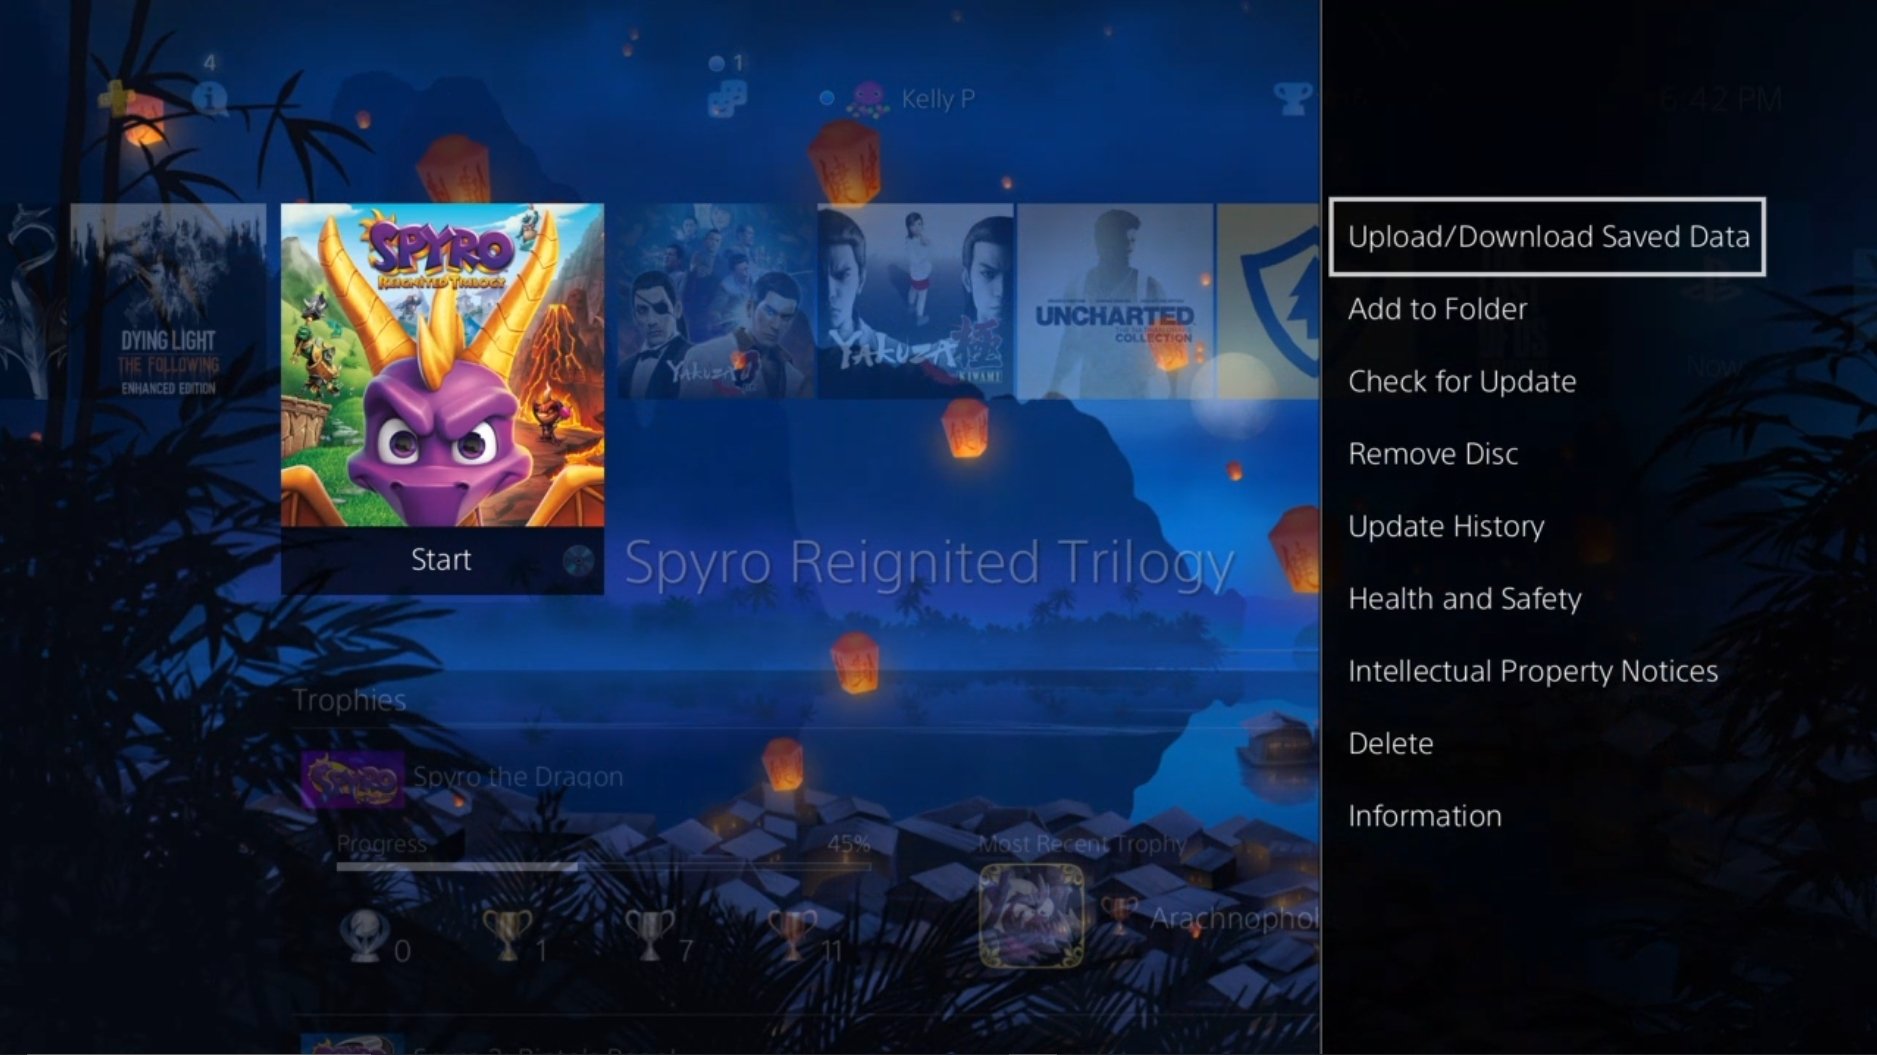 PS4 Home screen options menu screenshot